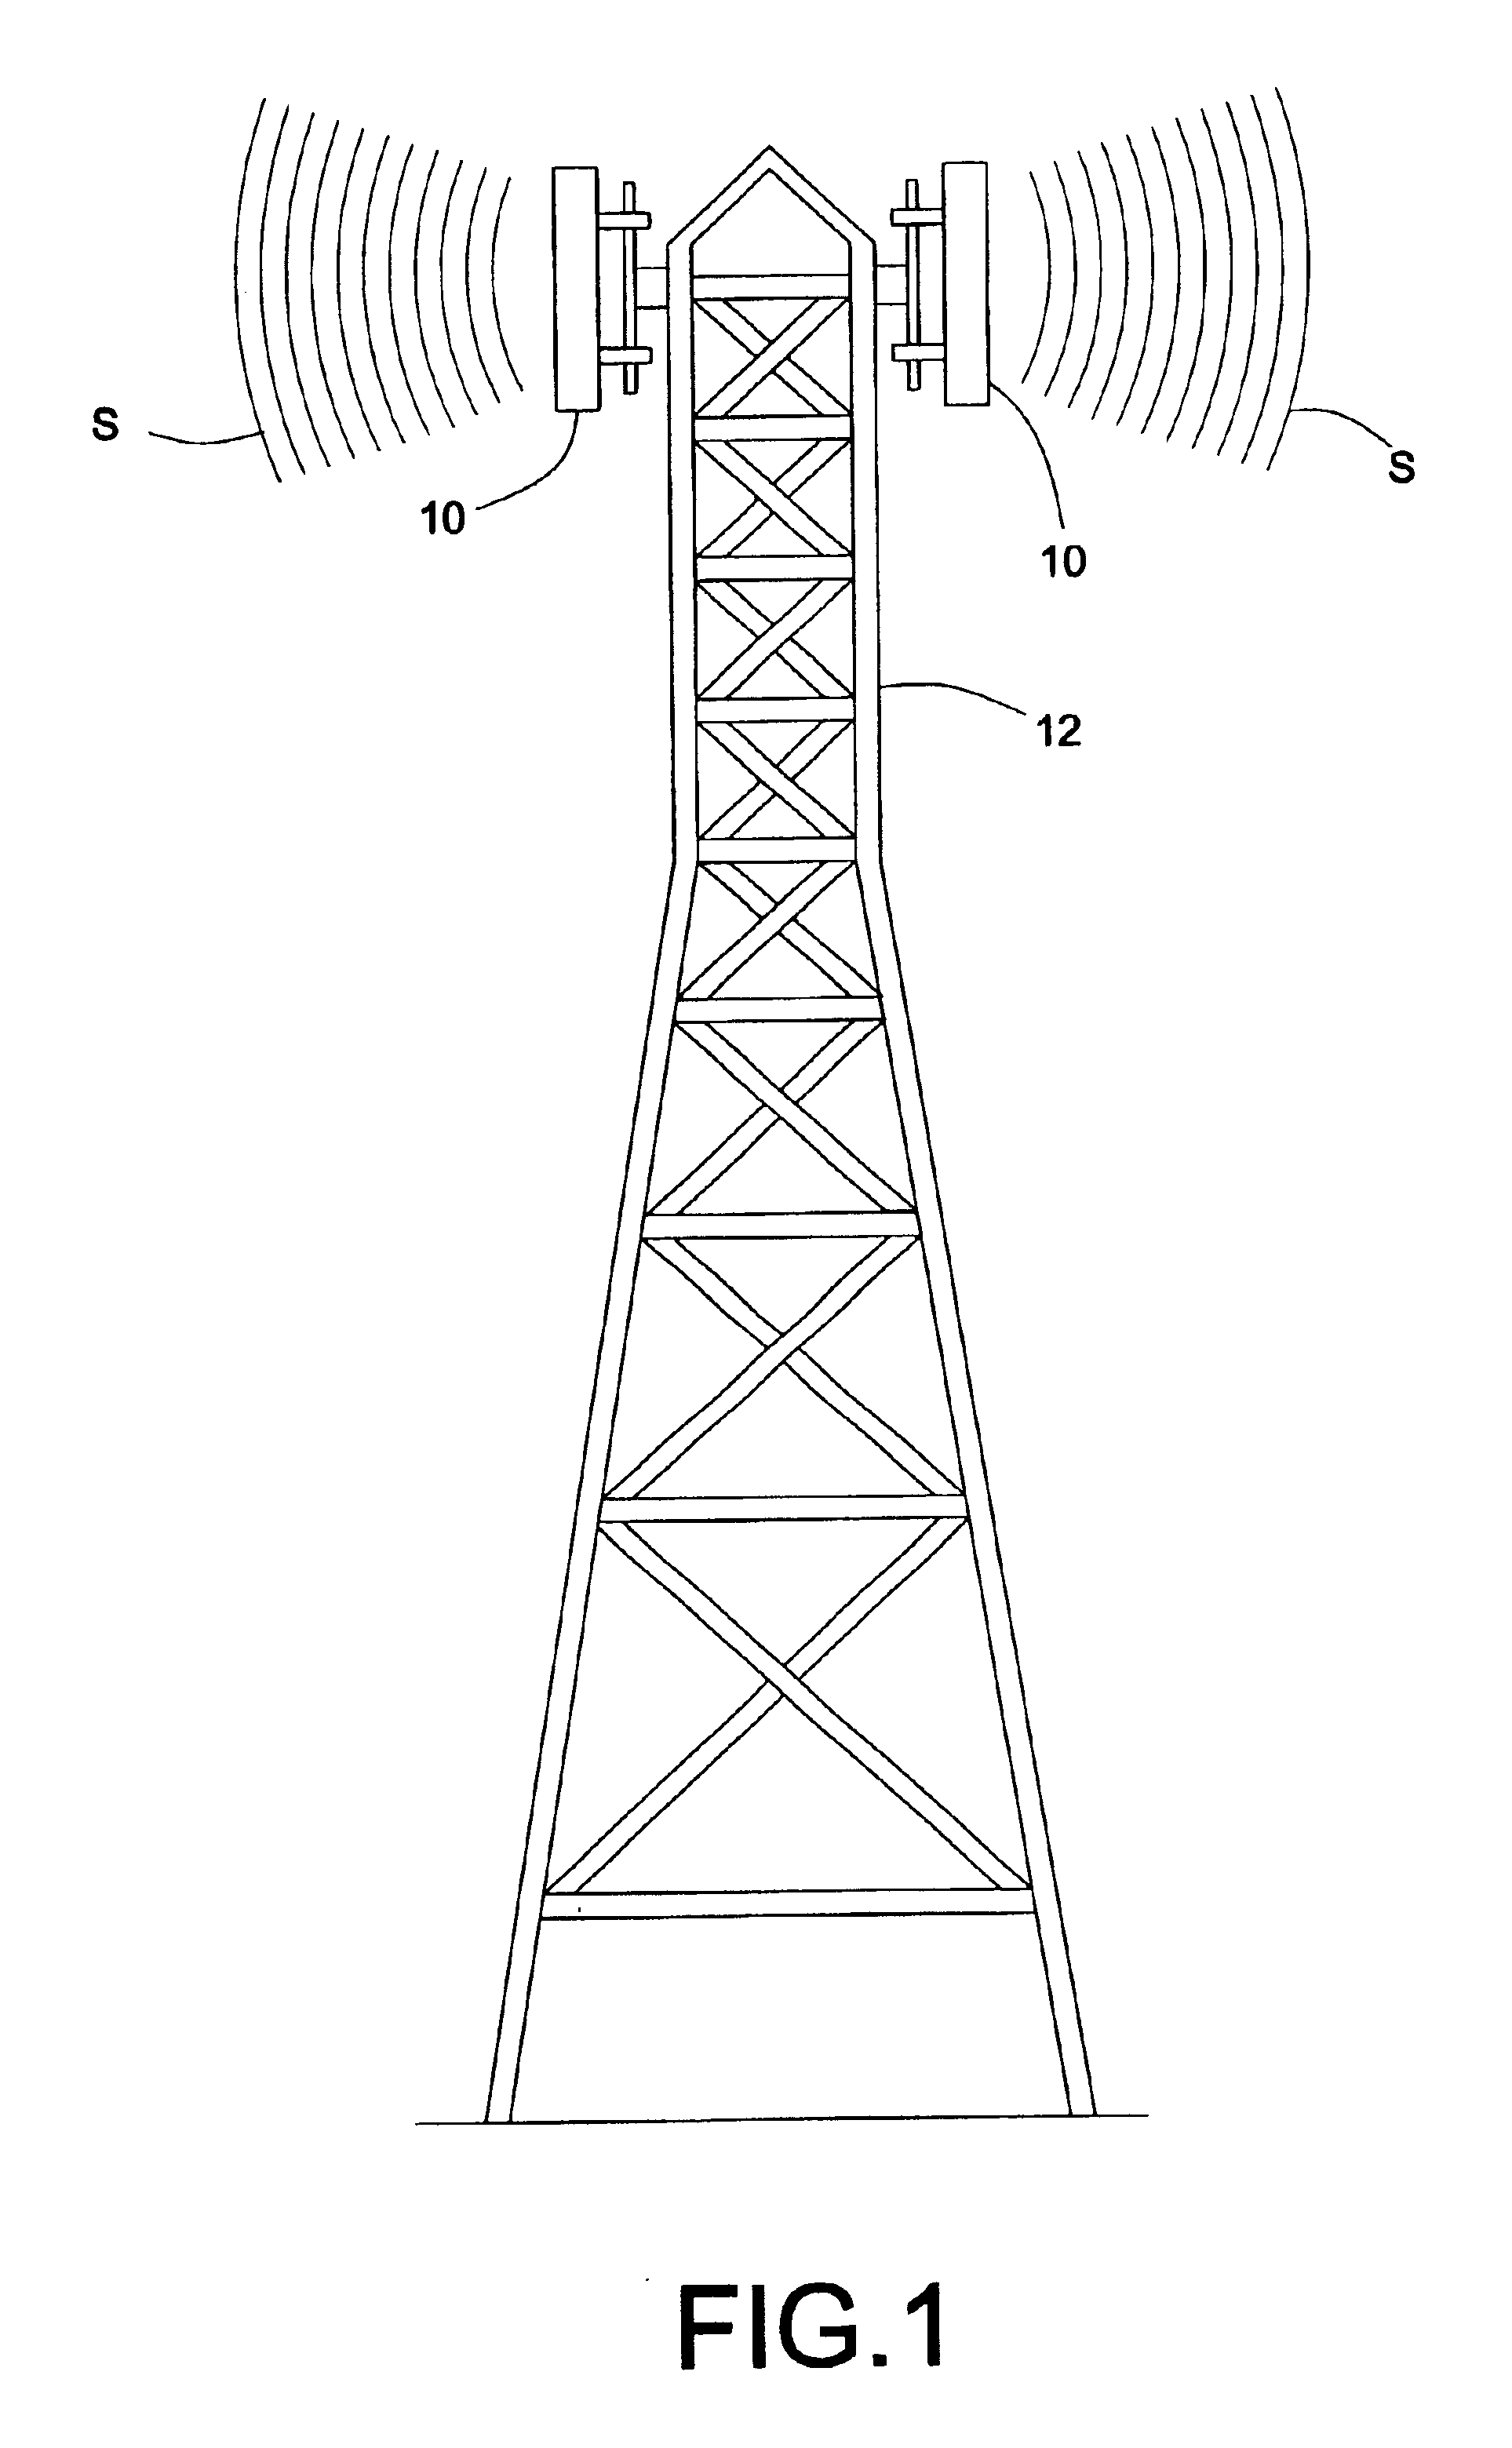 Antenna alignment system